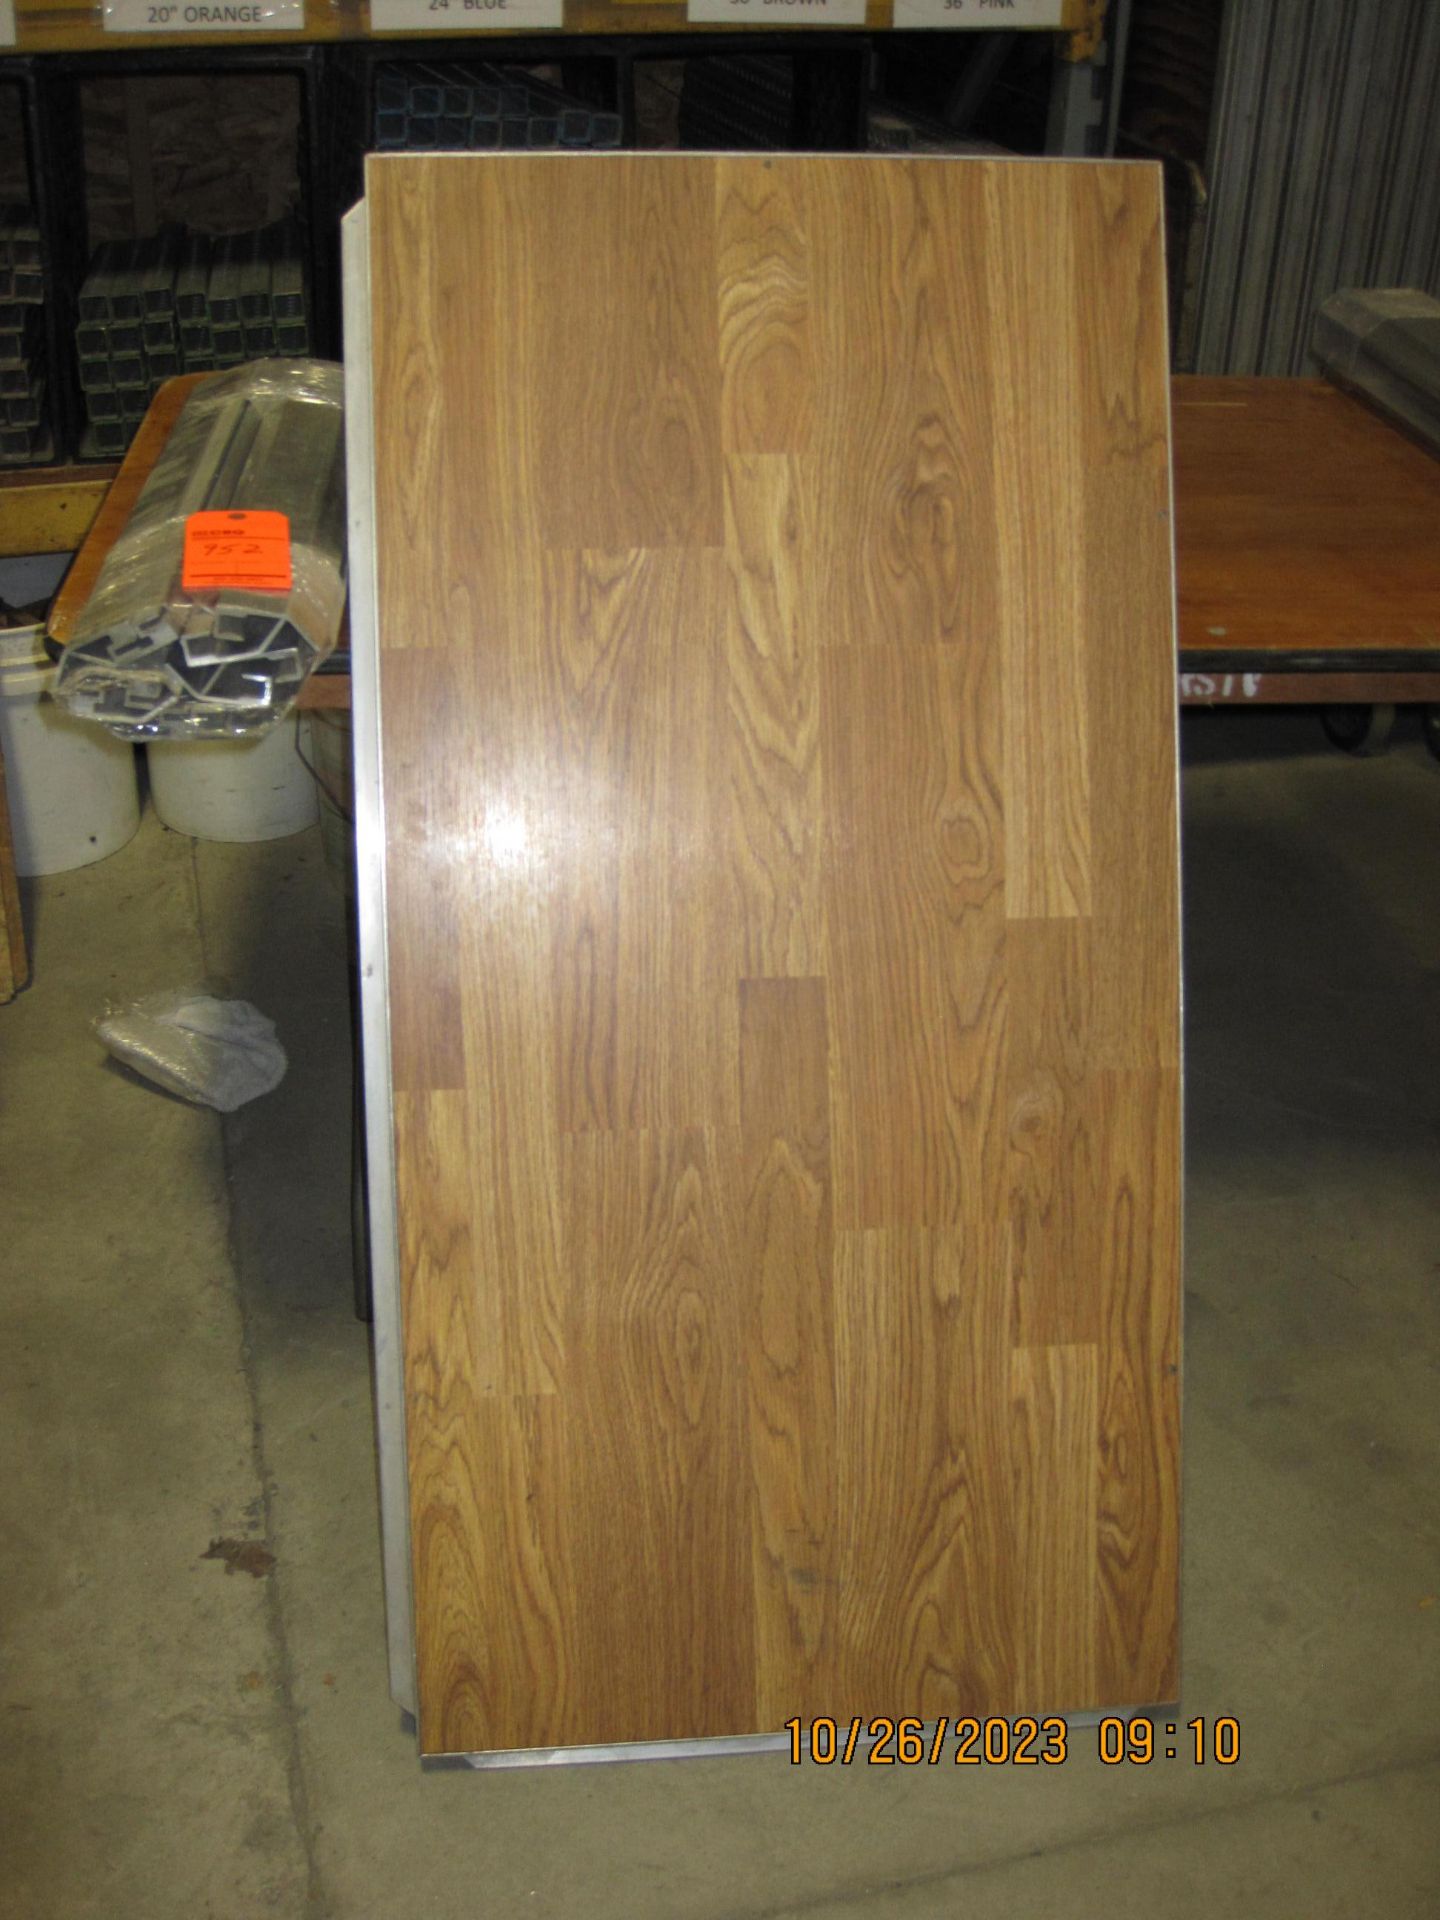 New England Plank Floor - Image 2 of 2